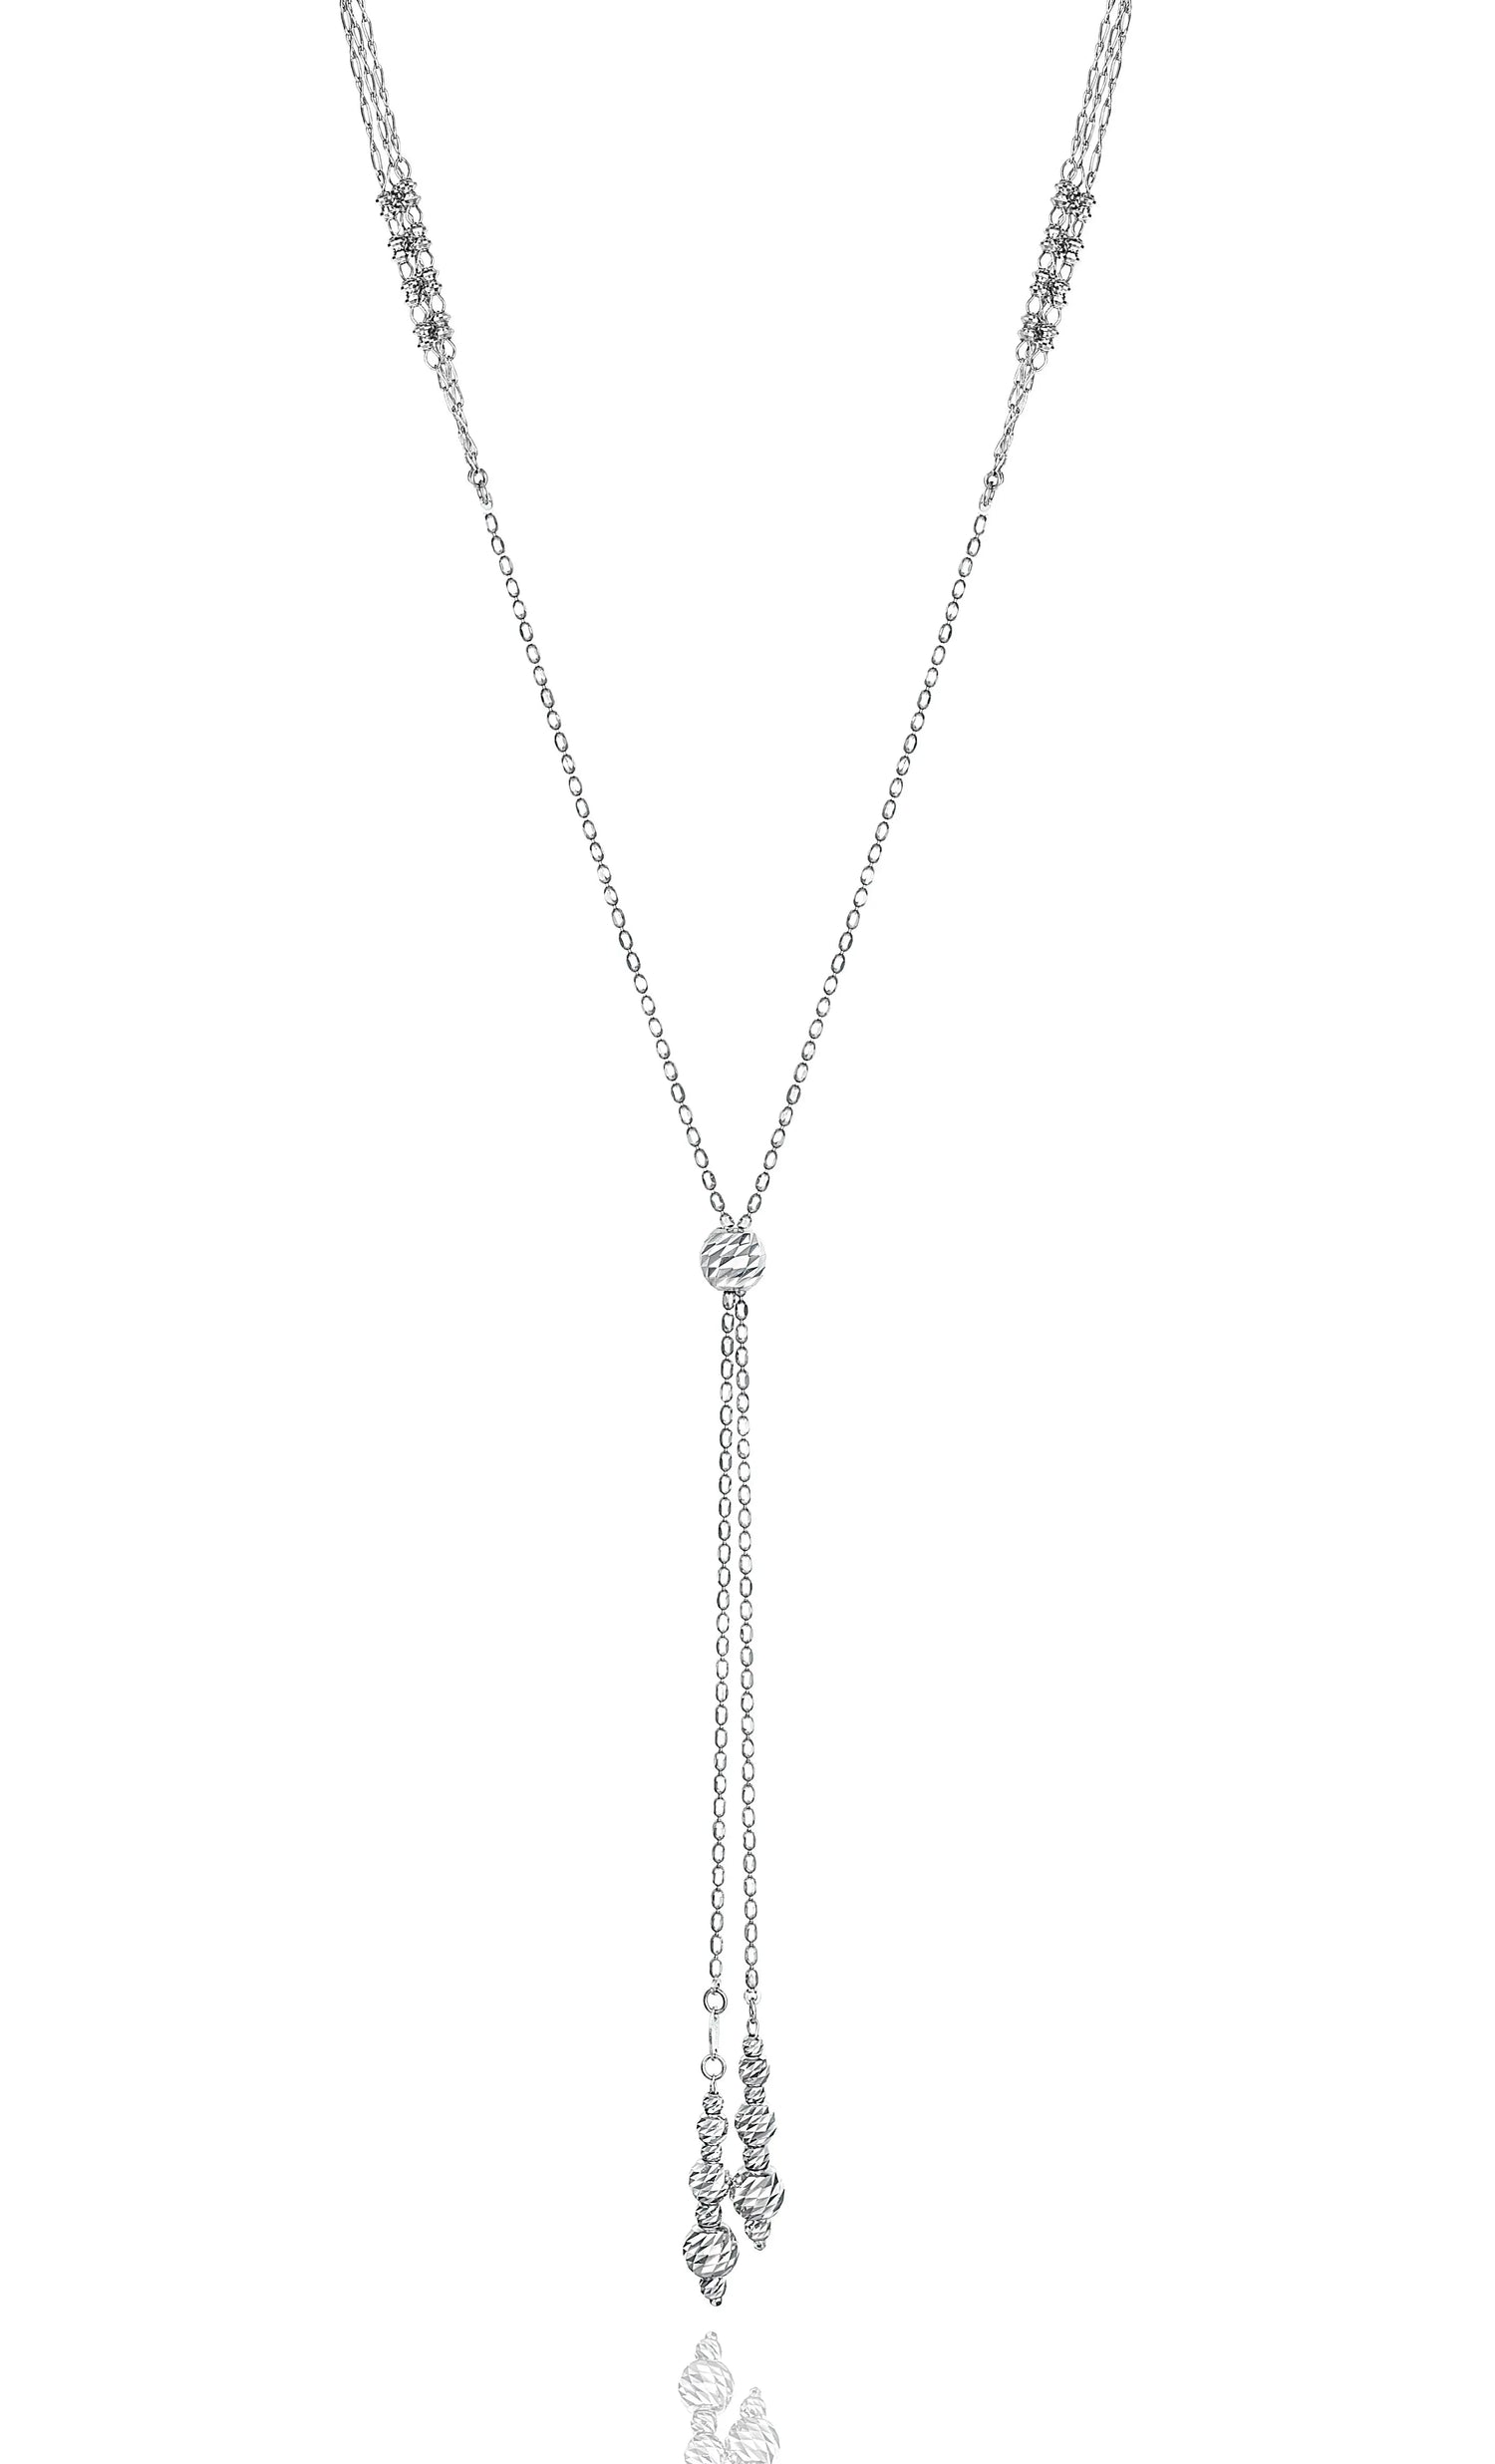 Long Platinum Necklace. Designed by Platinum Born